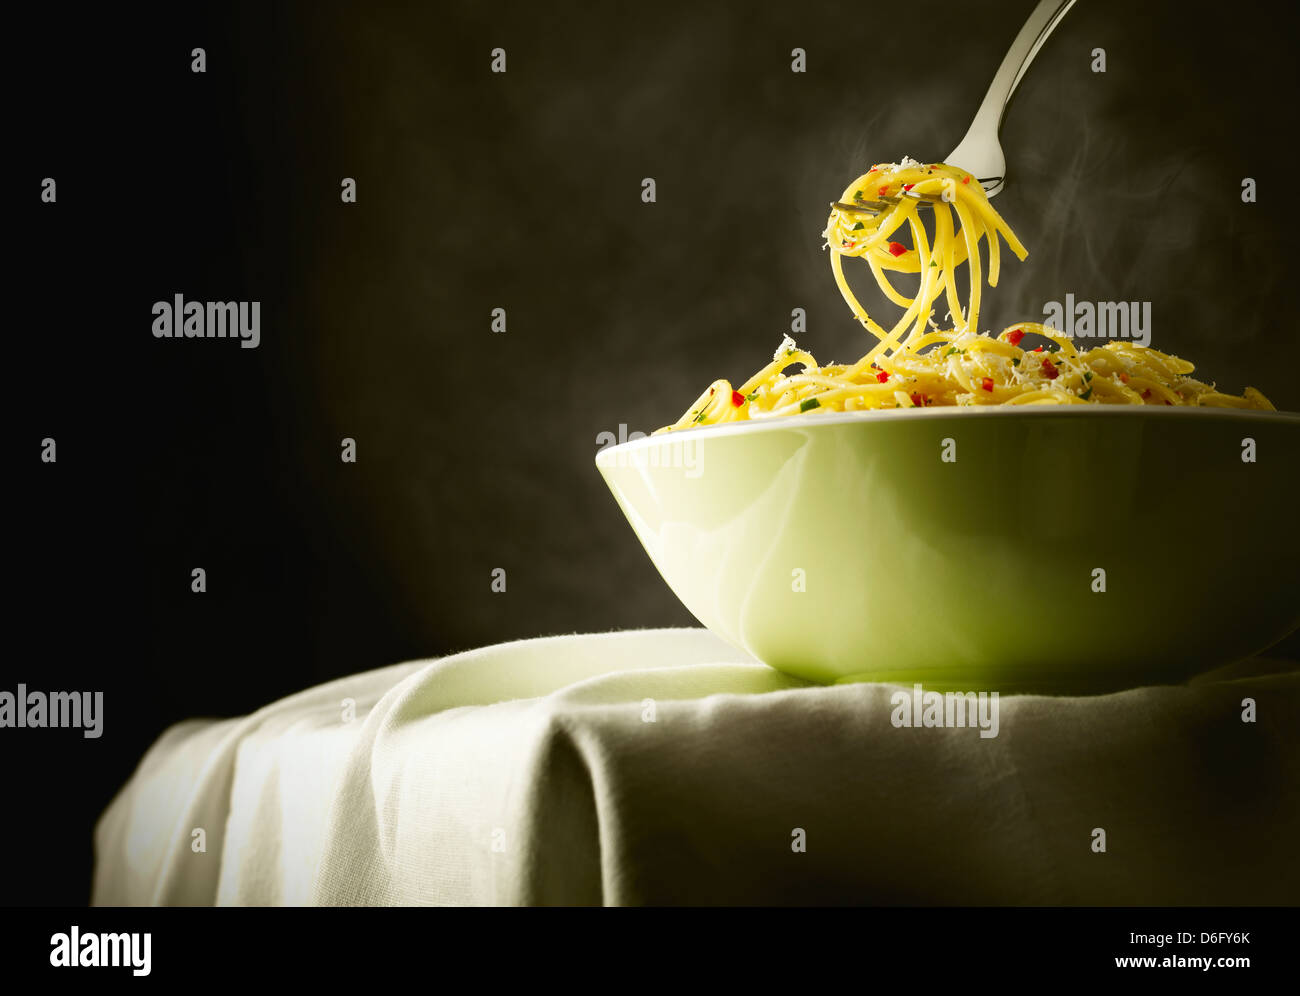 Spaghetti mit Chili Stockfoto